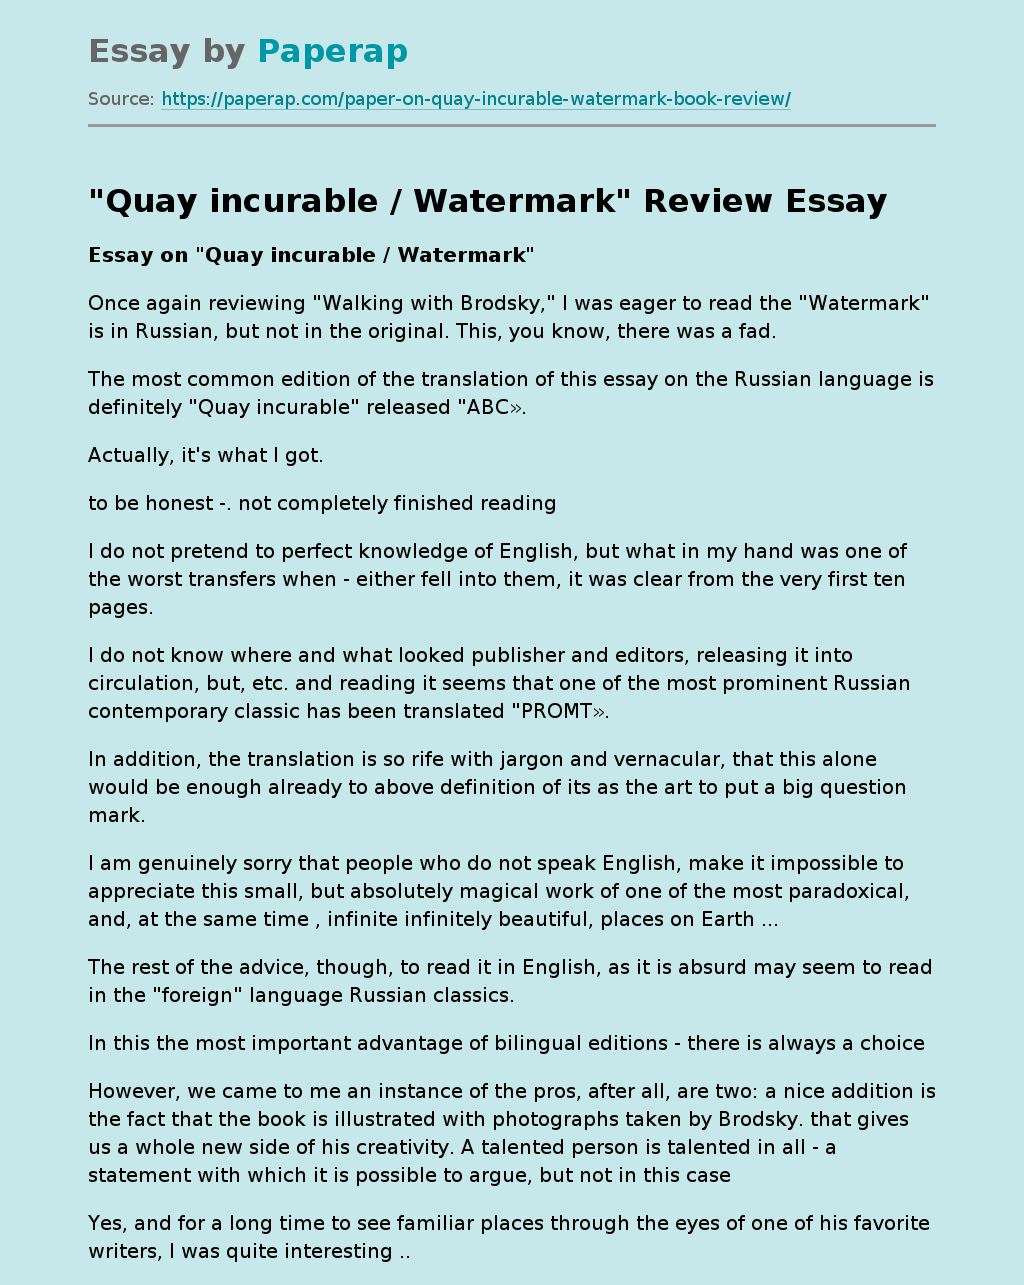 "Quay incurable / Watermark"